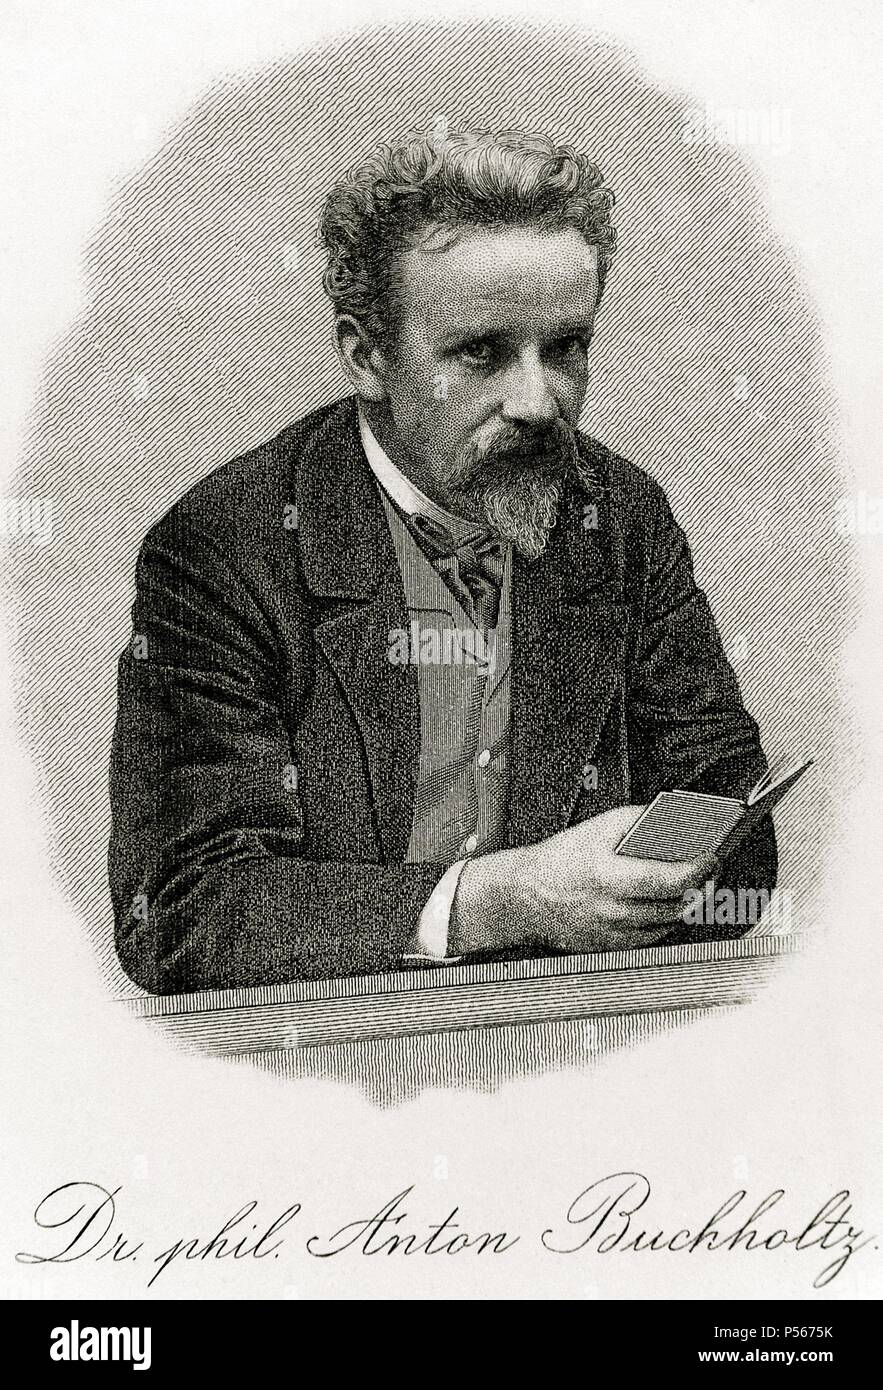 Anton Buchholtz (1848-1901). Historian, numismatist and collector. Engraving. 19th century. Stock Photo